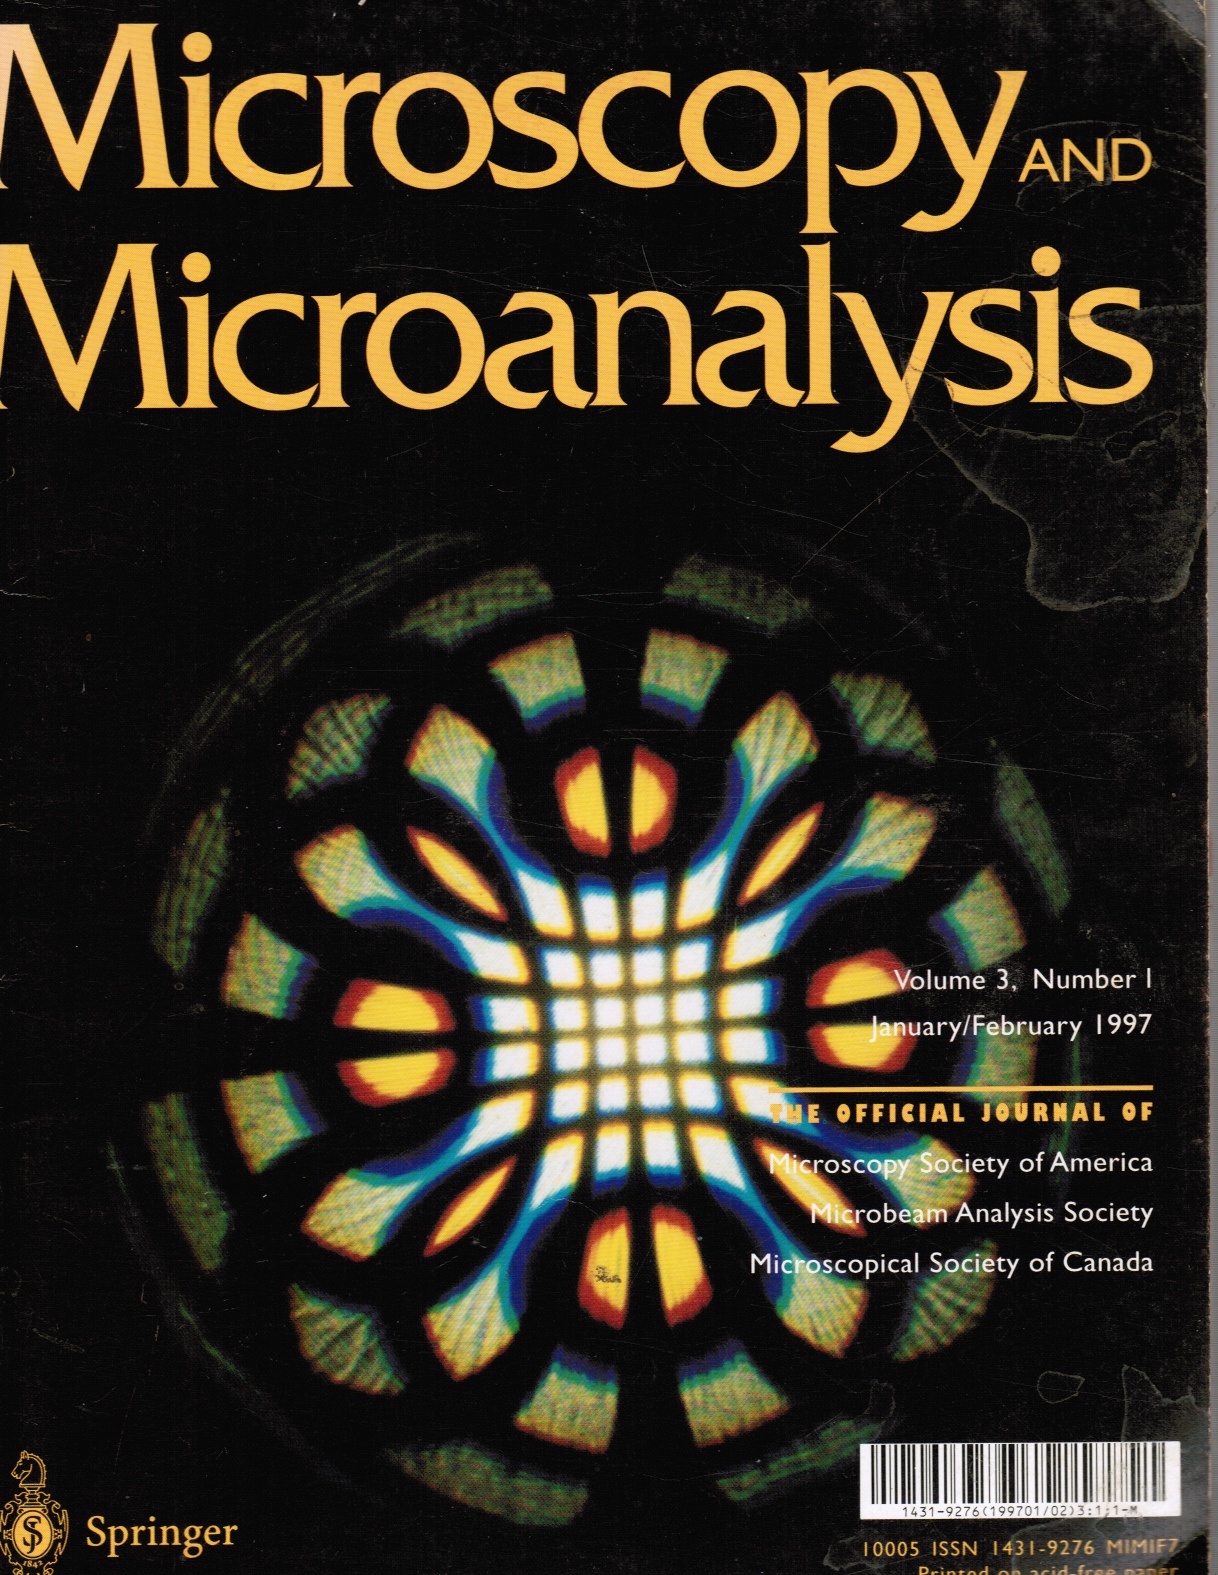 MICROSCOPY SOCIETY OF AMERICA - Microscopy and Microanalysis, Jan-Feb 1977